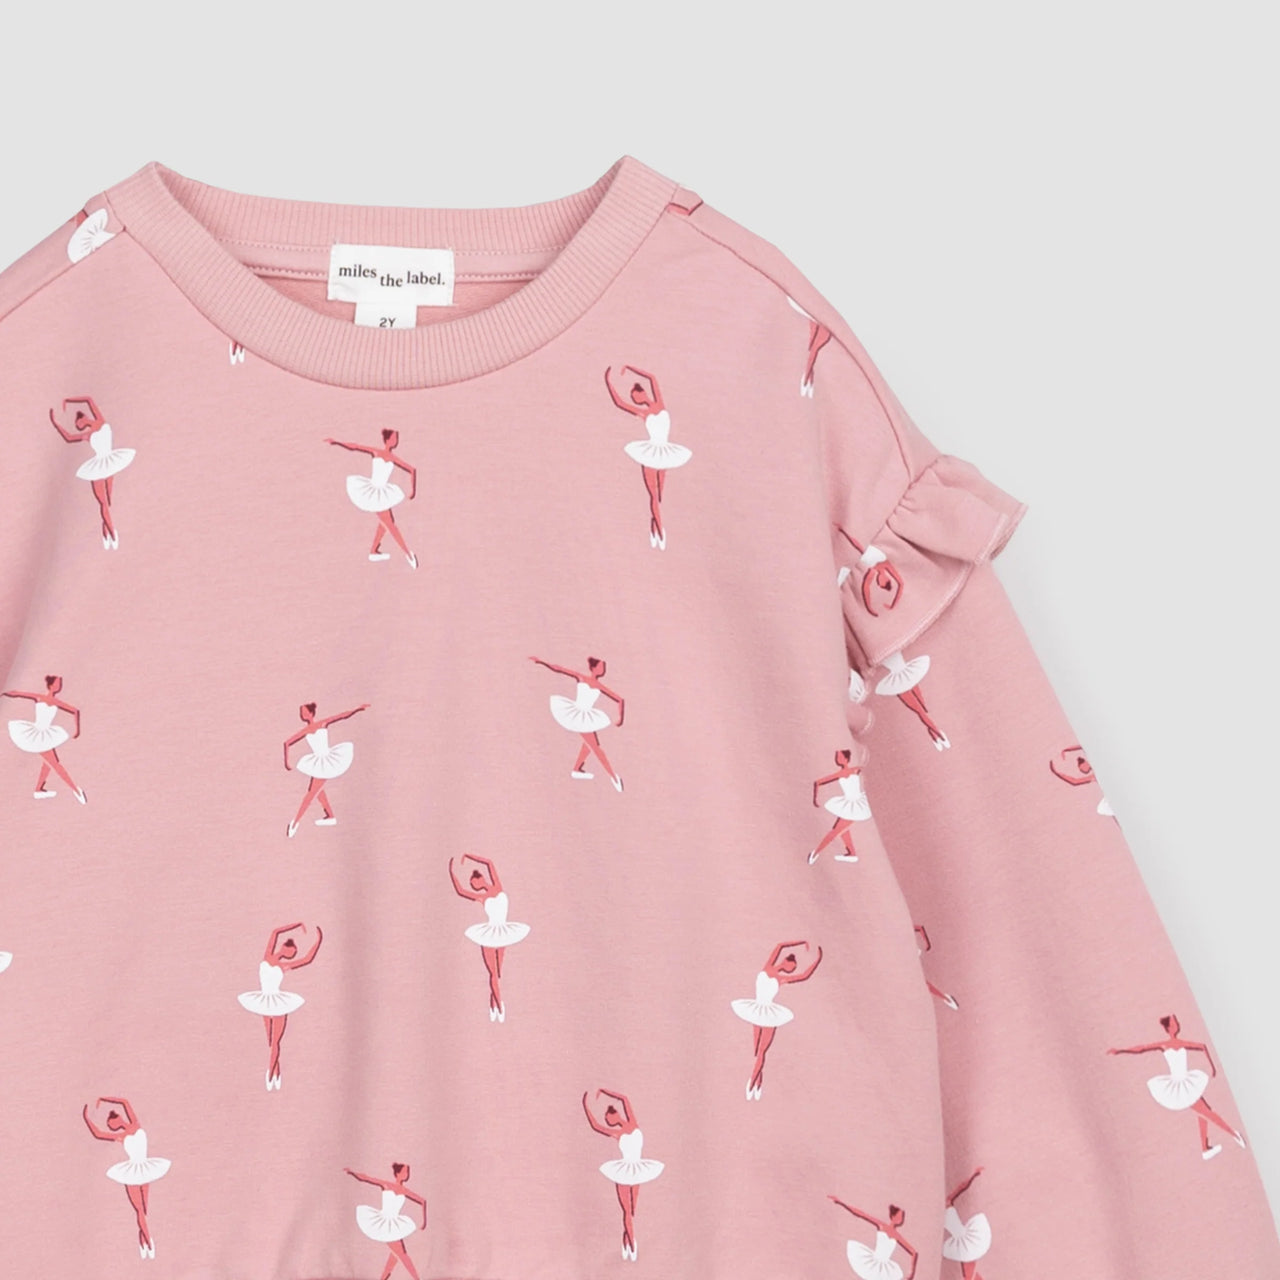 Ballerina Print on Rose Sweatshirt